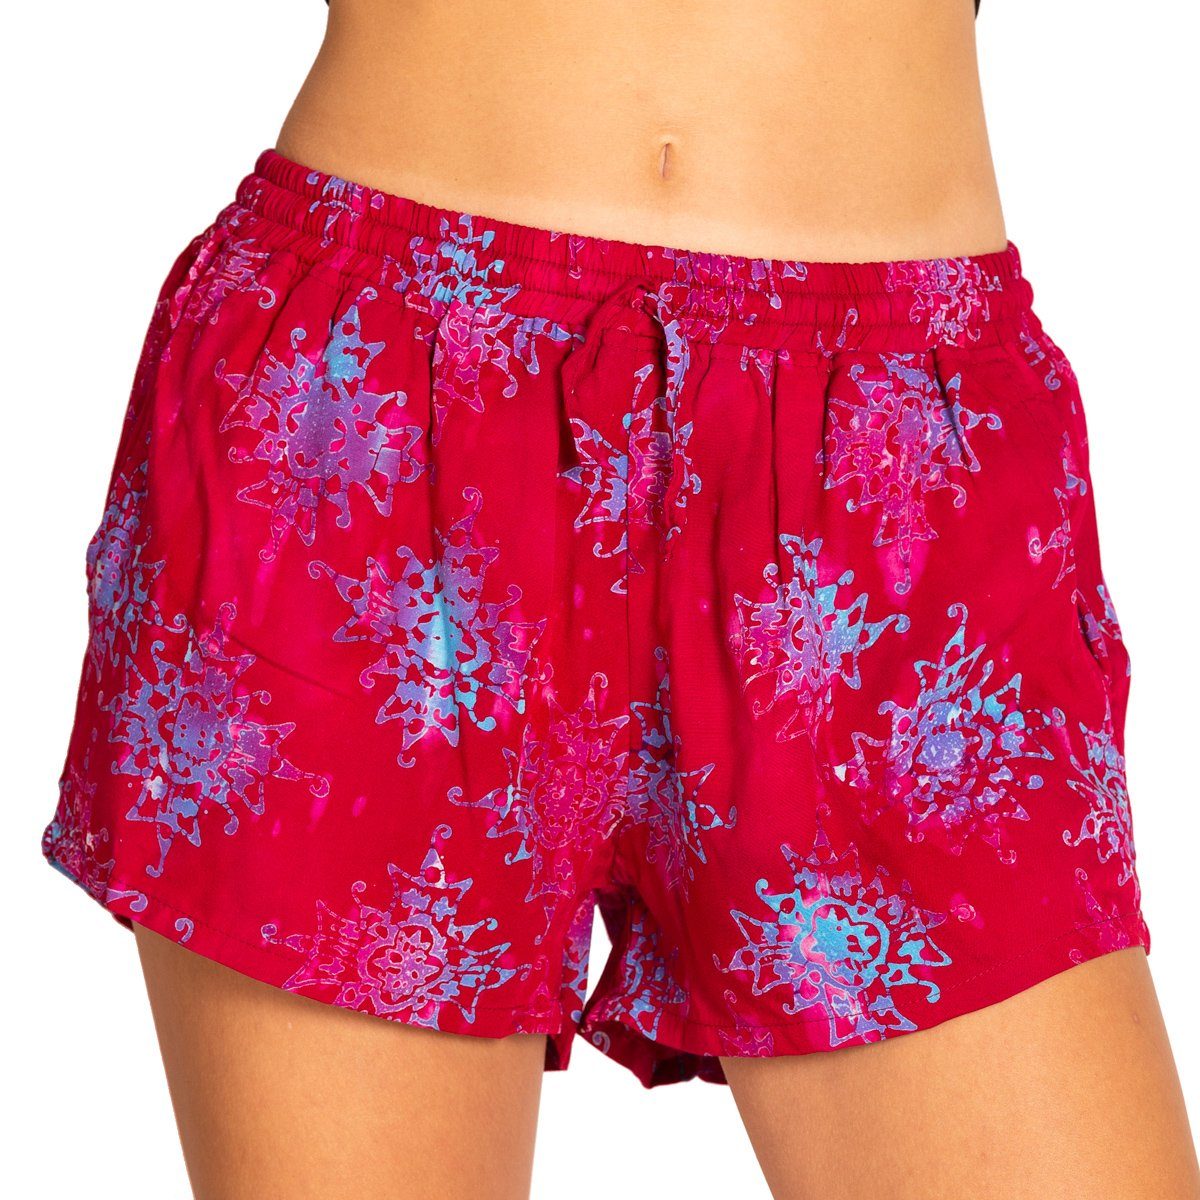 PANASIAM Strandshorts Damen Shorts Wachsbatik für Strand Yoga oder Meditation farbecht und angenehm zu Tragen Relaxshorts Damenshorts kurze Sporthose B506 red | Shorts